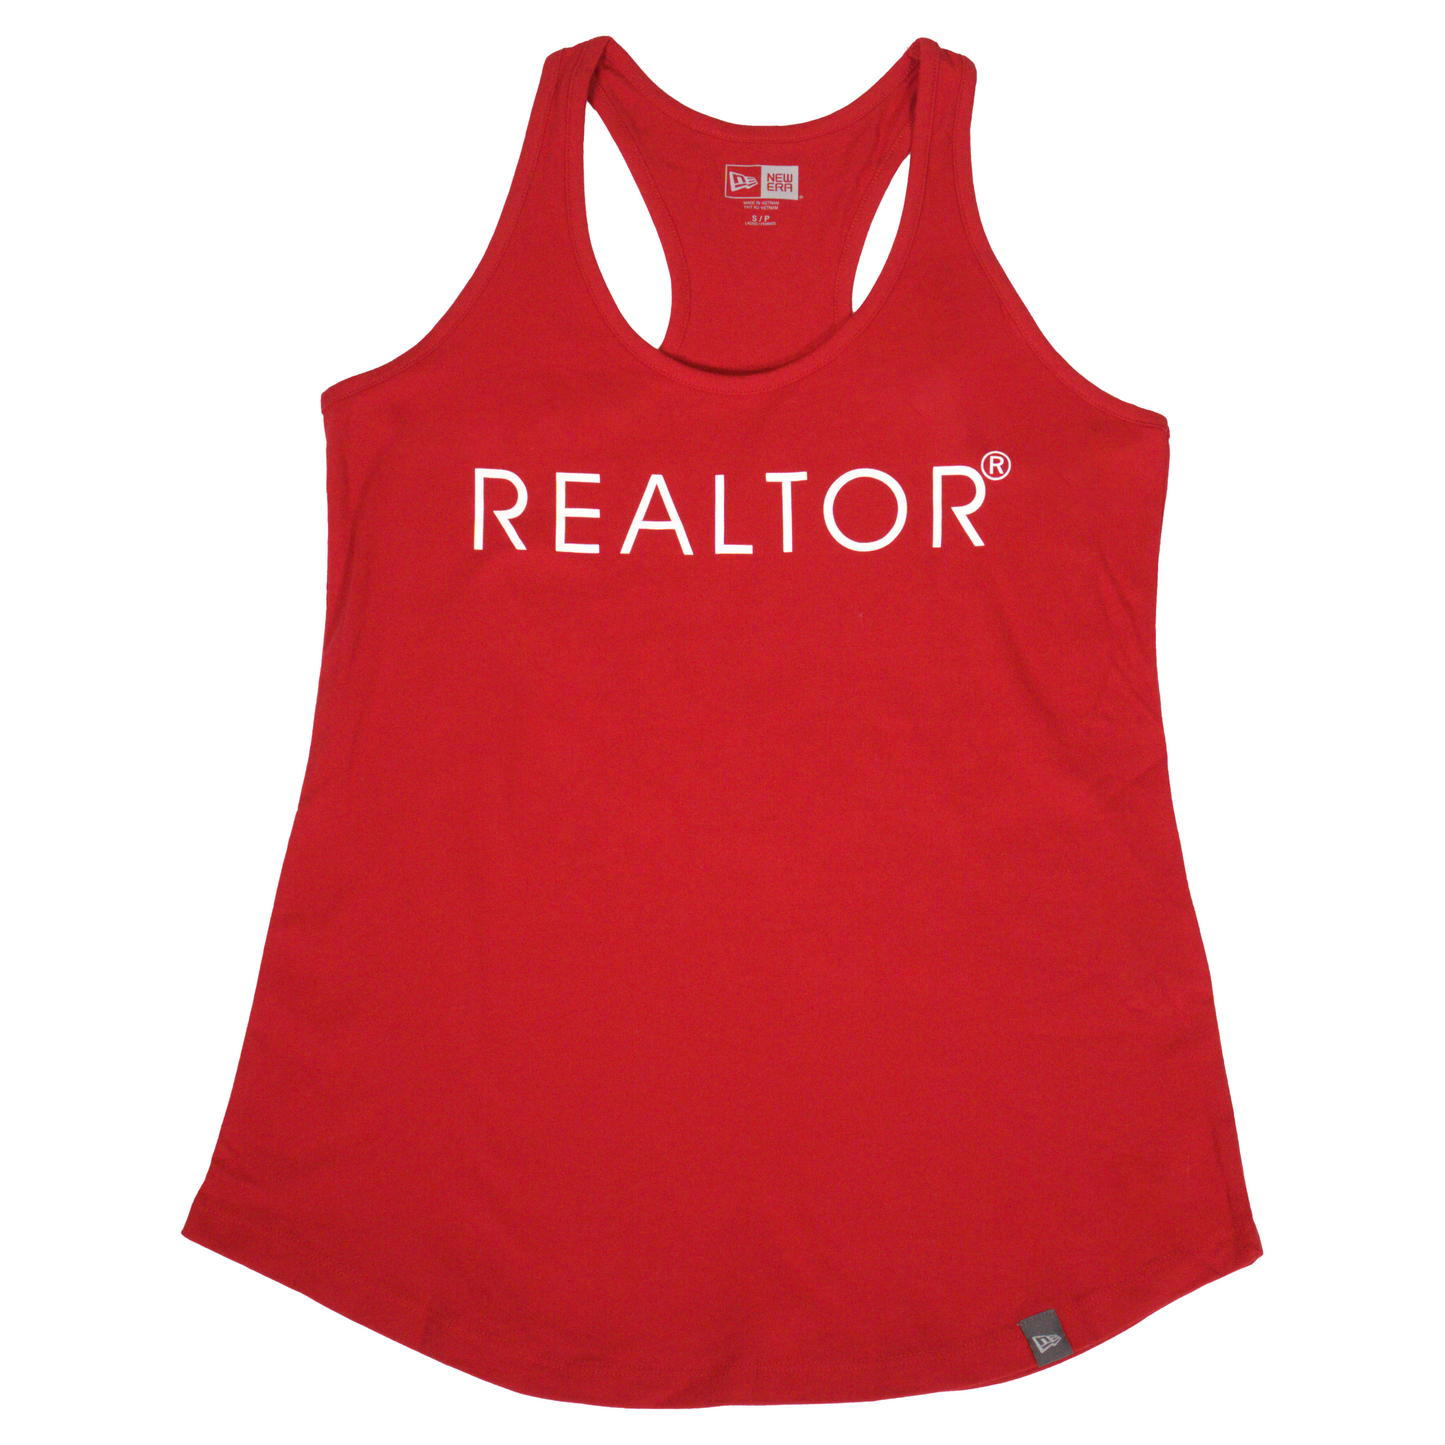 REALTOR®| Women's Heritage Blend Racerback Tank Apparel Small Scarlet 